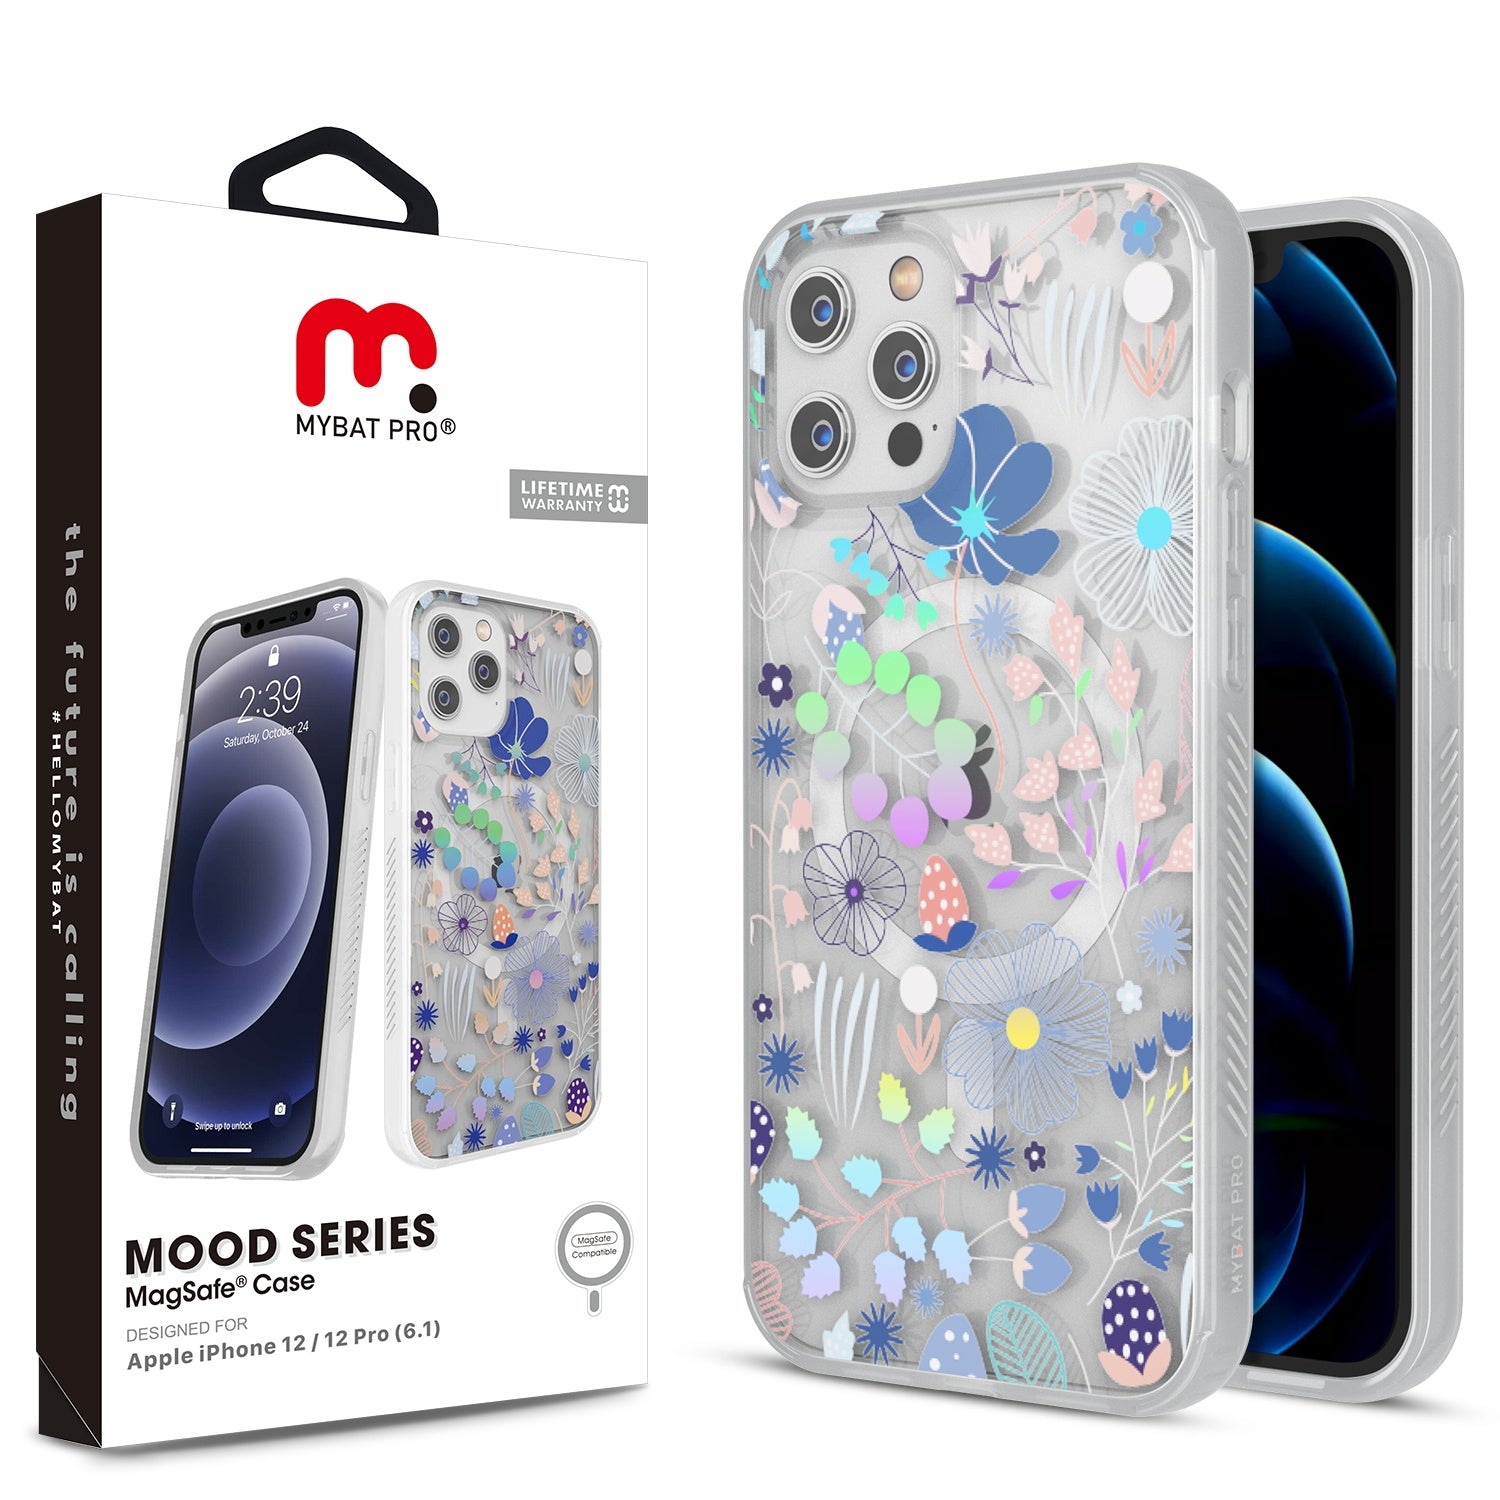 Estuche para Iphone 12/12 Pro - MyBat Pro Mood Series - Colorful Flowers MyBat Pro